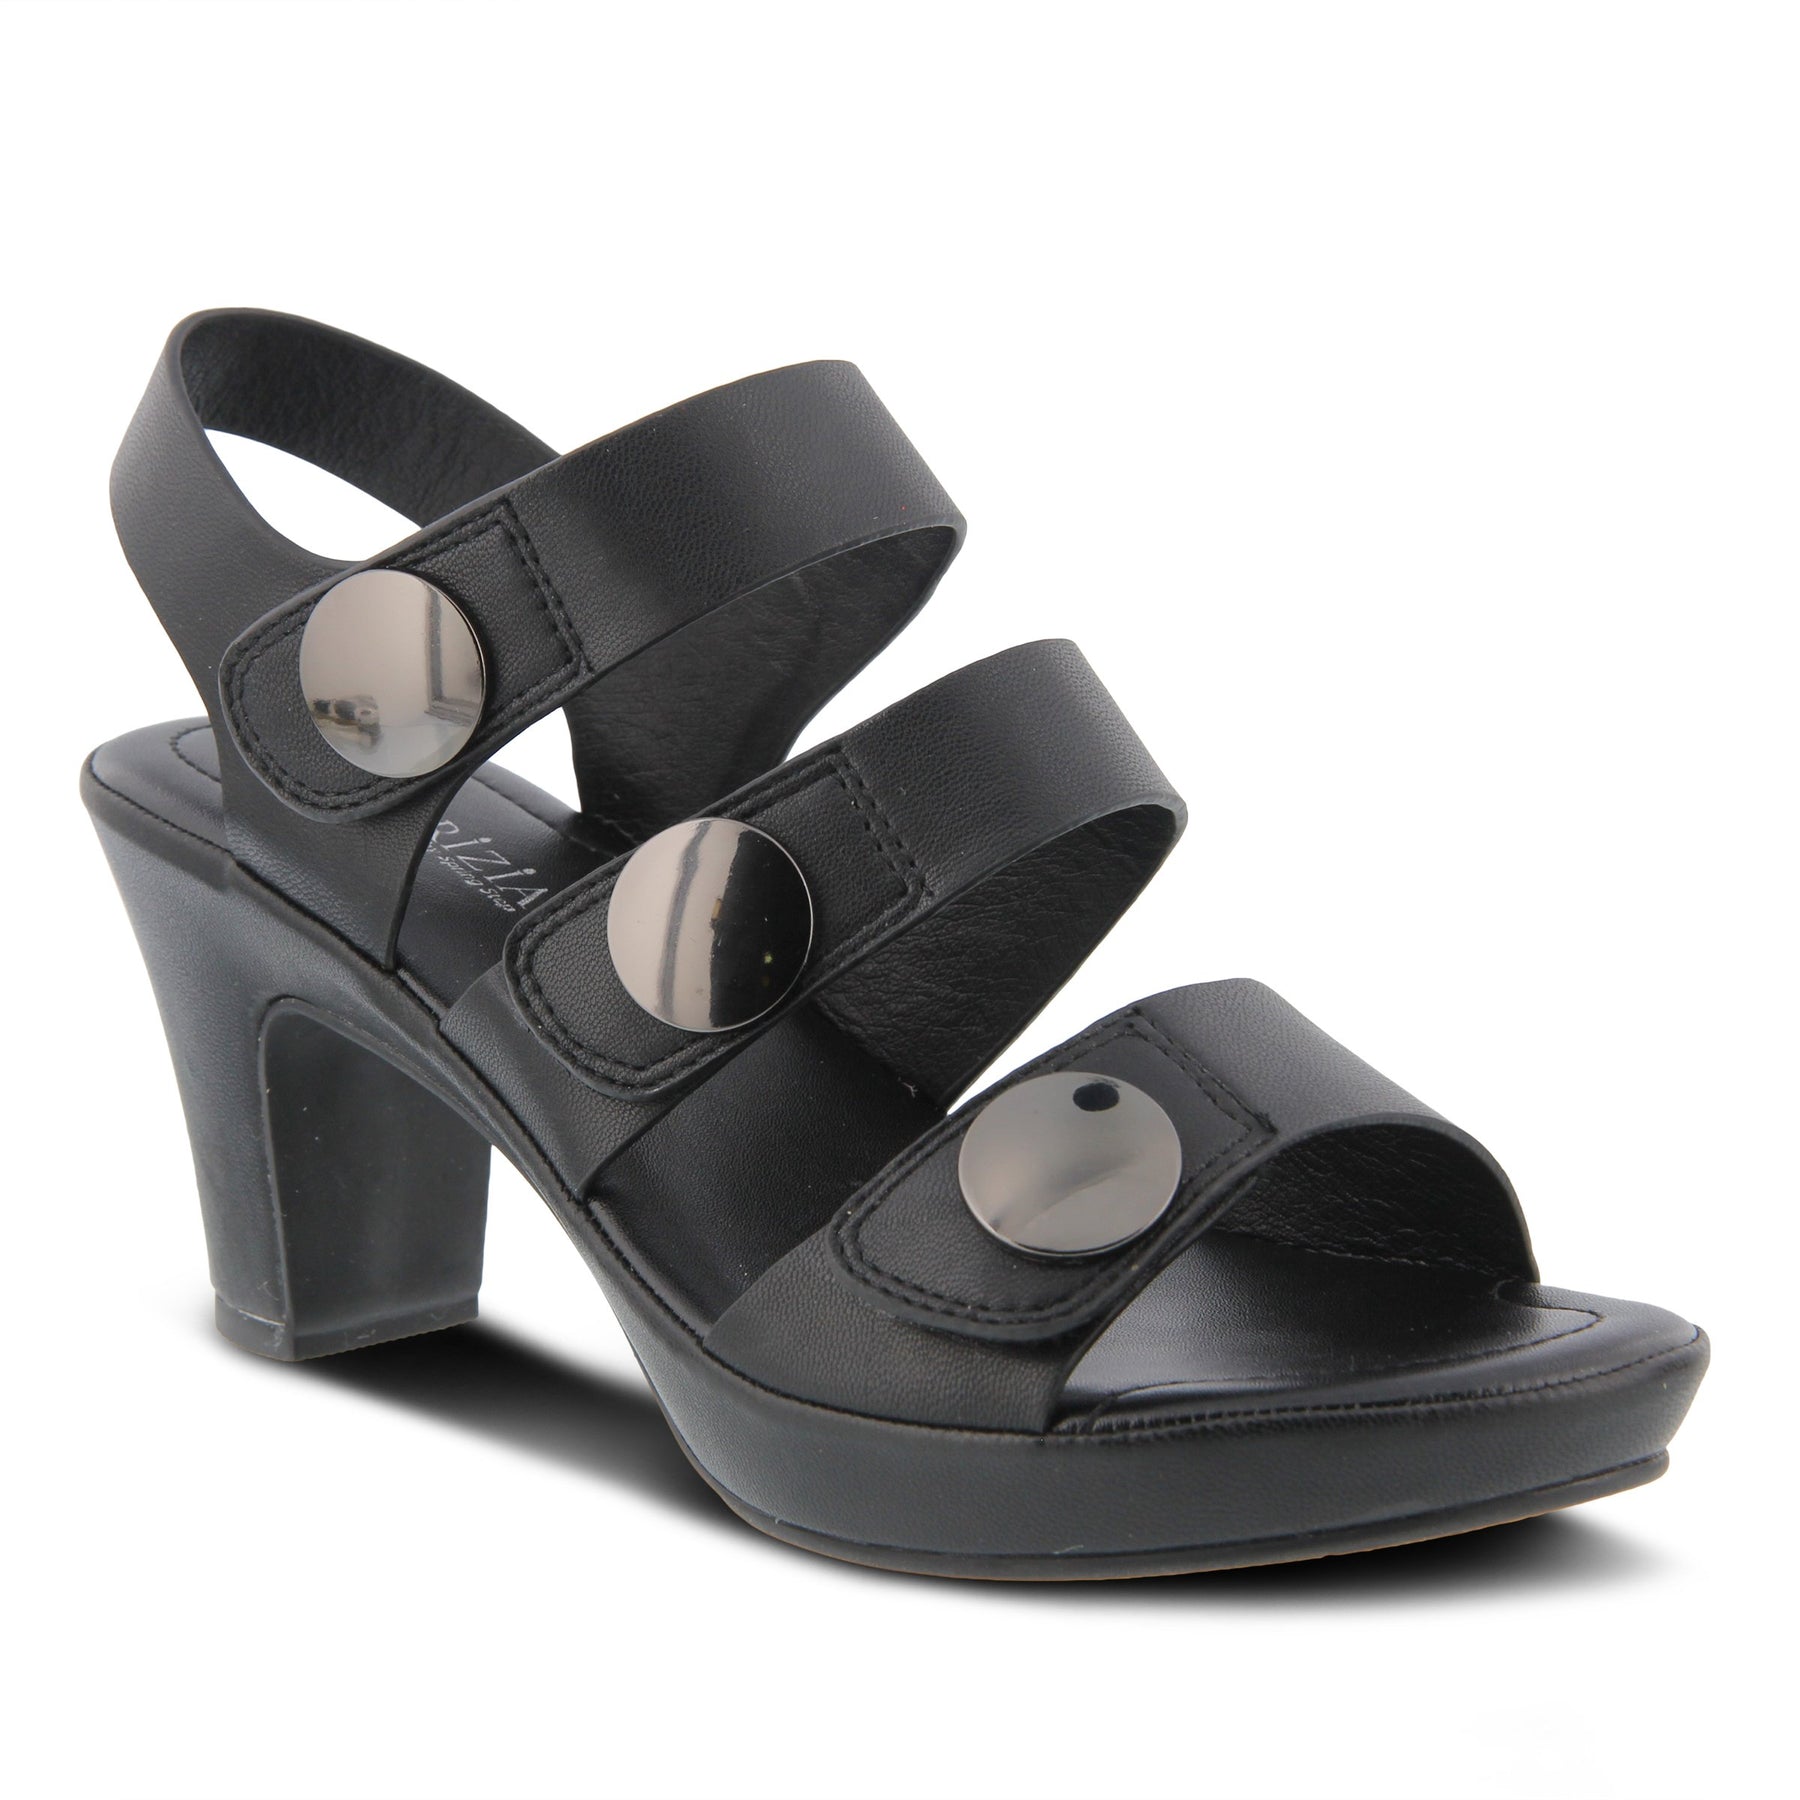 TRIODEE SLINGBACK SANDAL by PATRIZIA – Spring Step Shoes